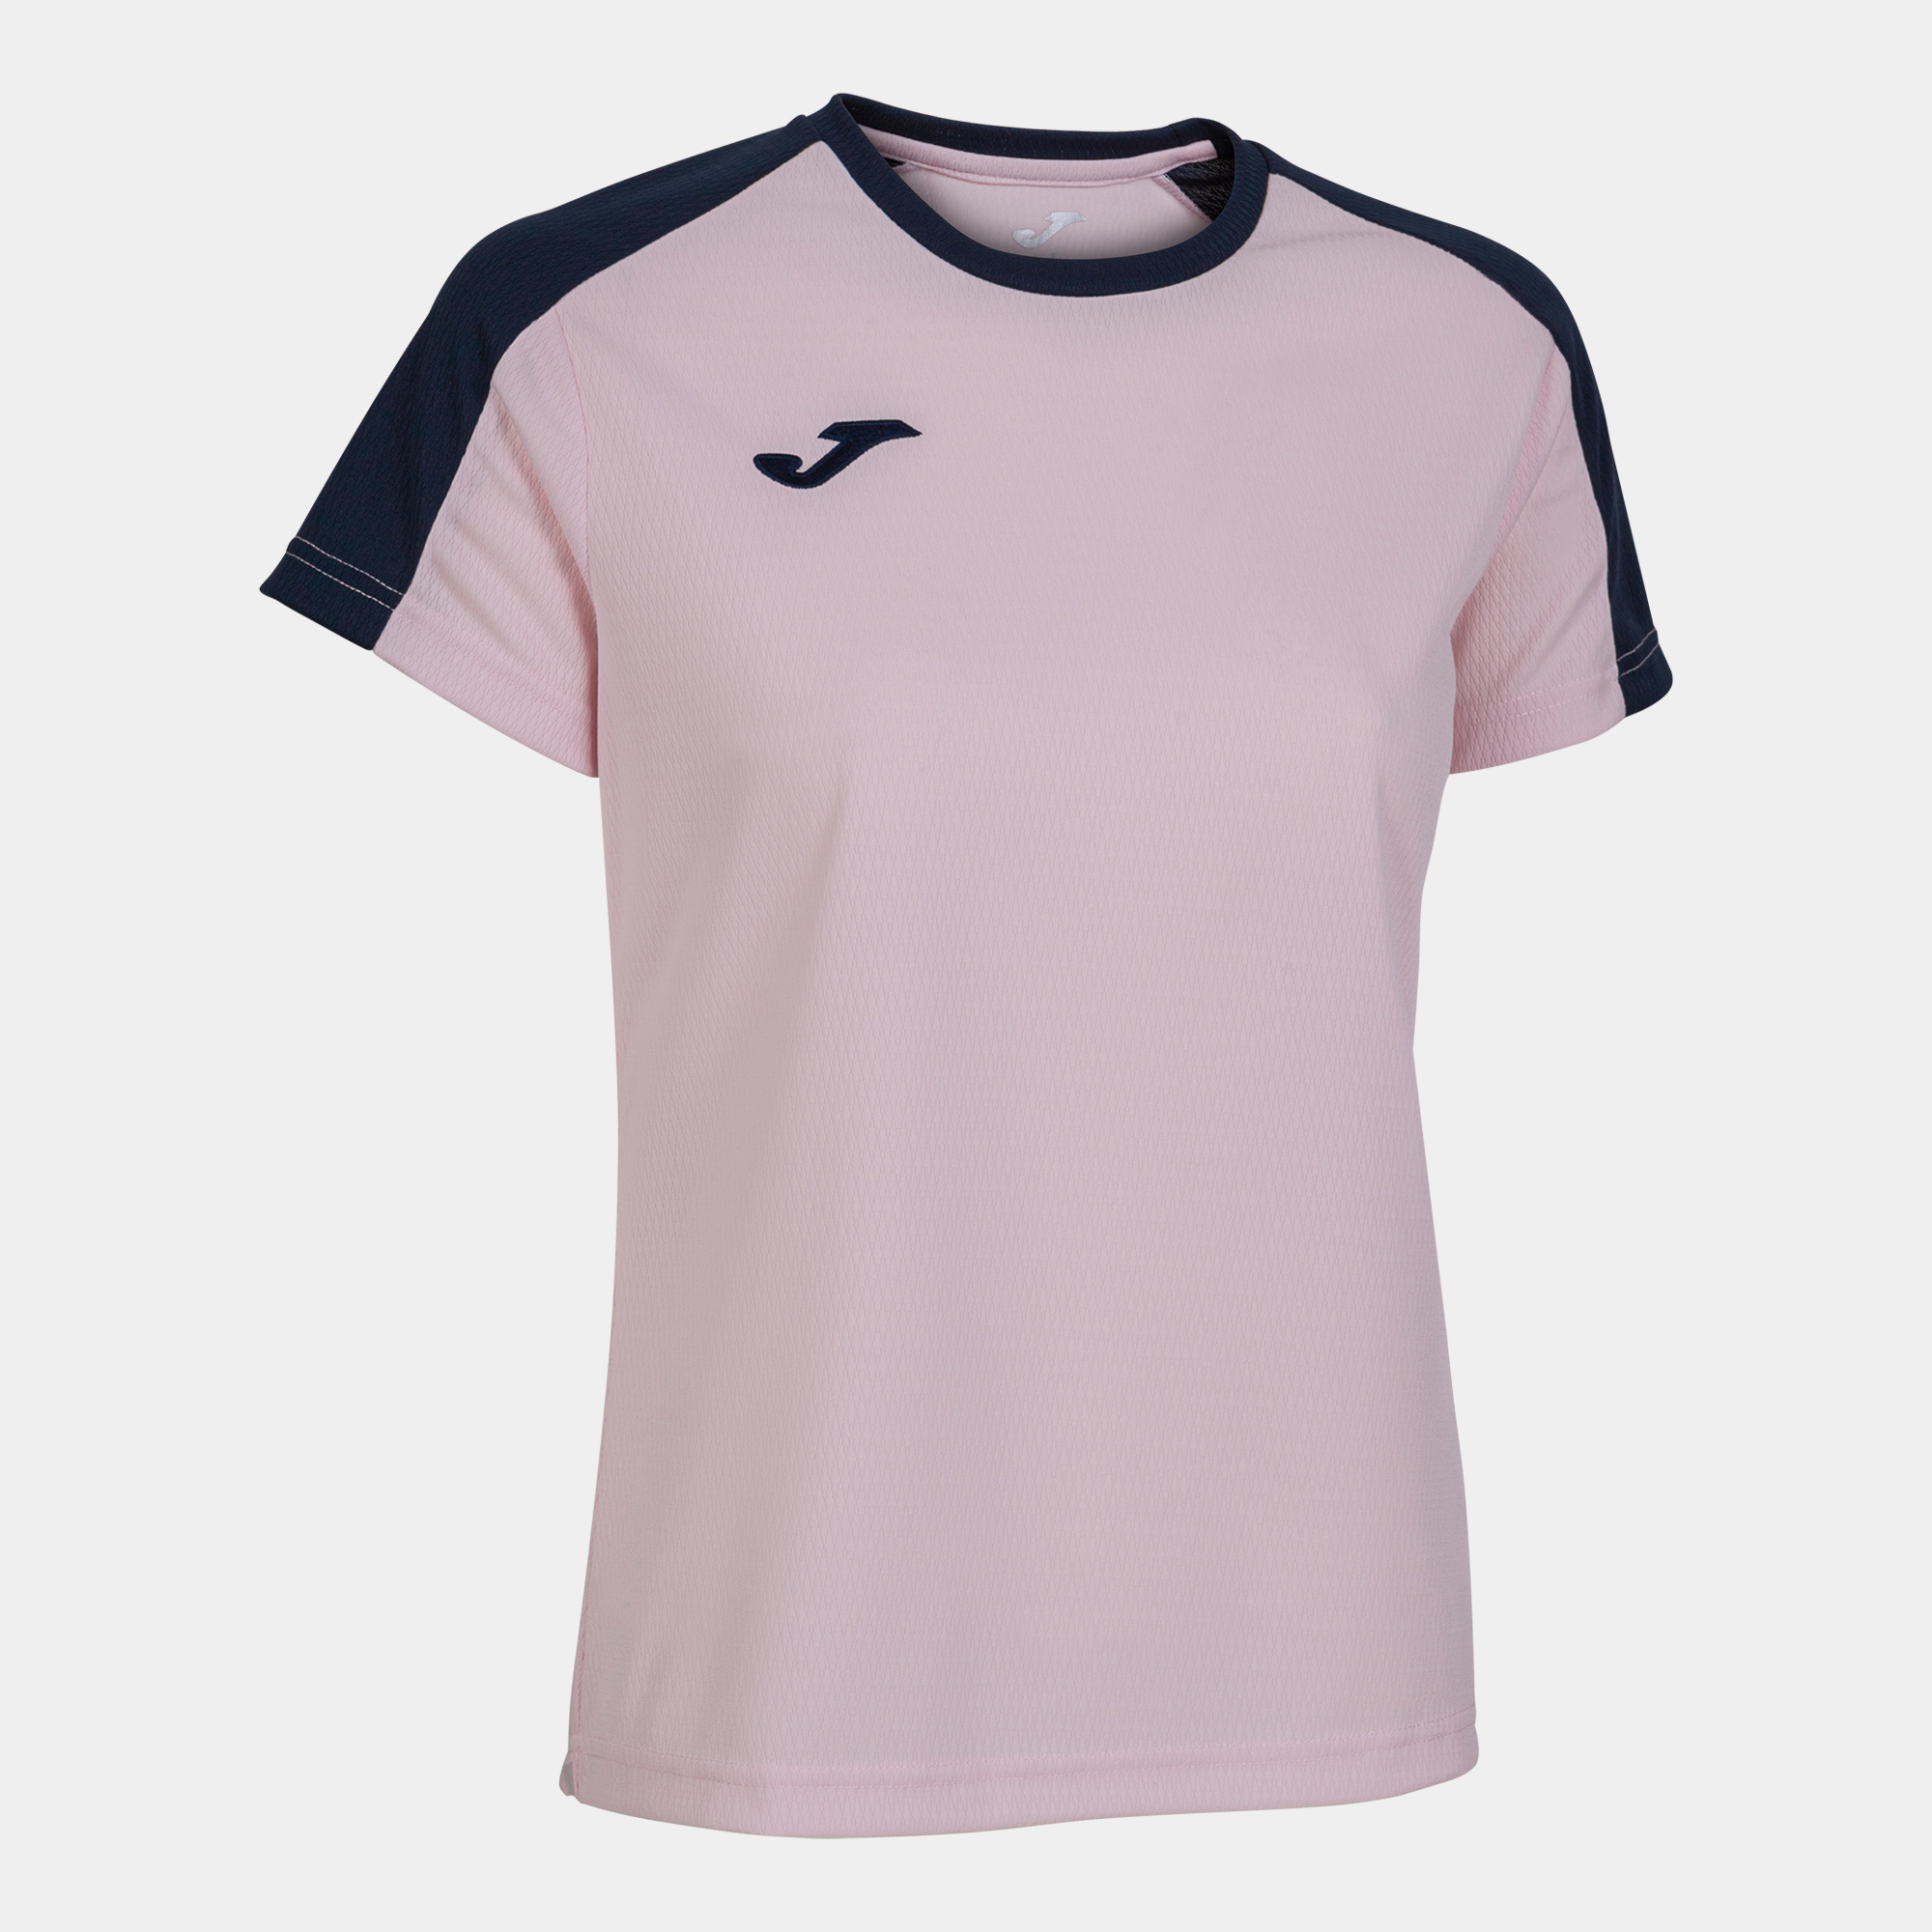 Camiseta tirantes mujer Eco Championship rosa marino